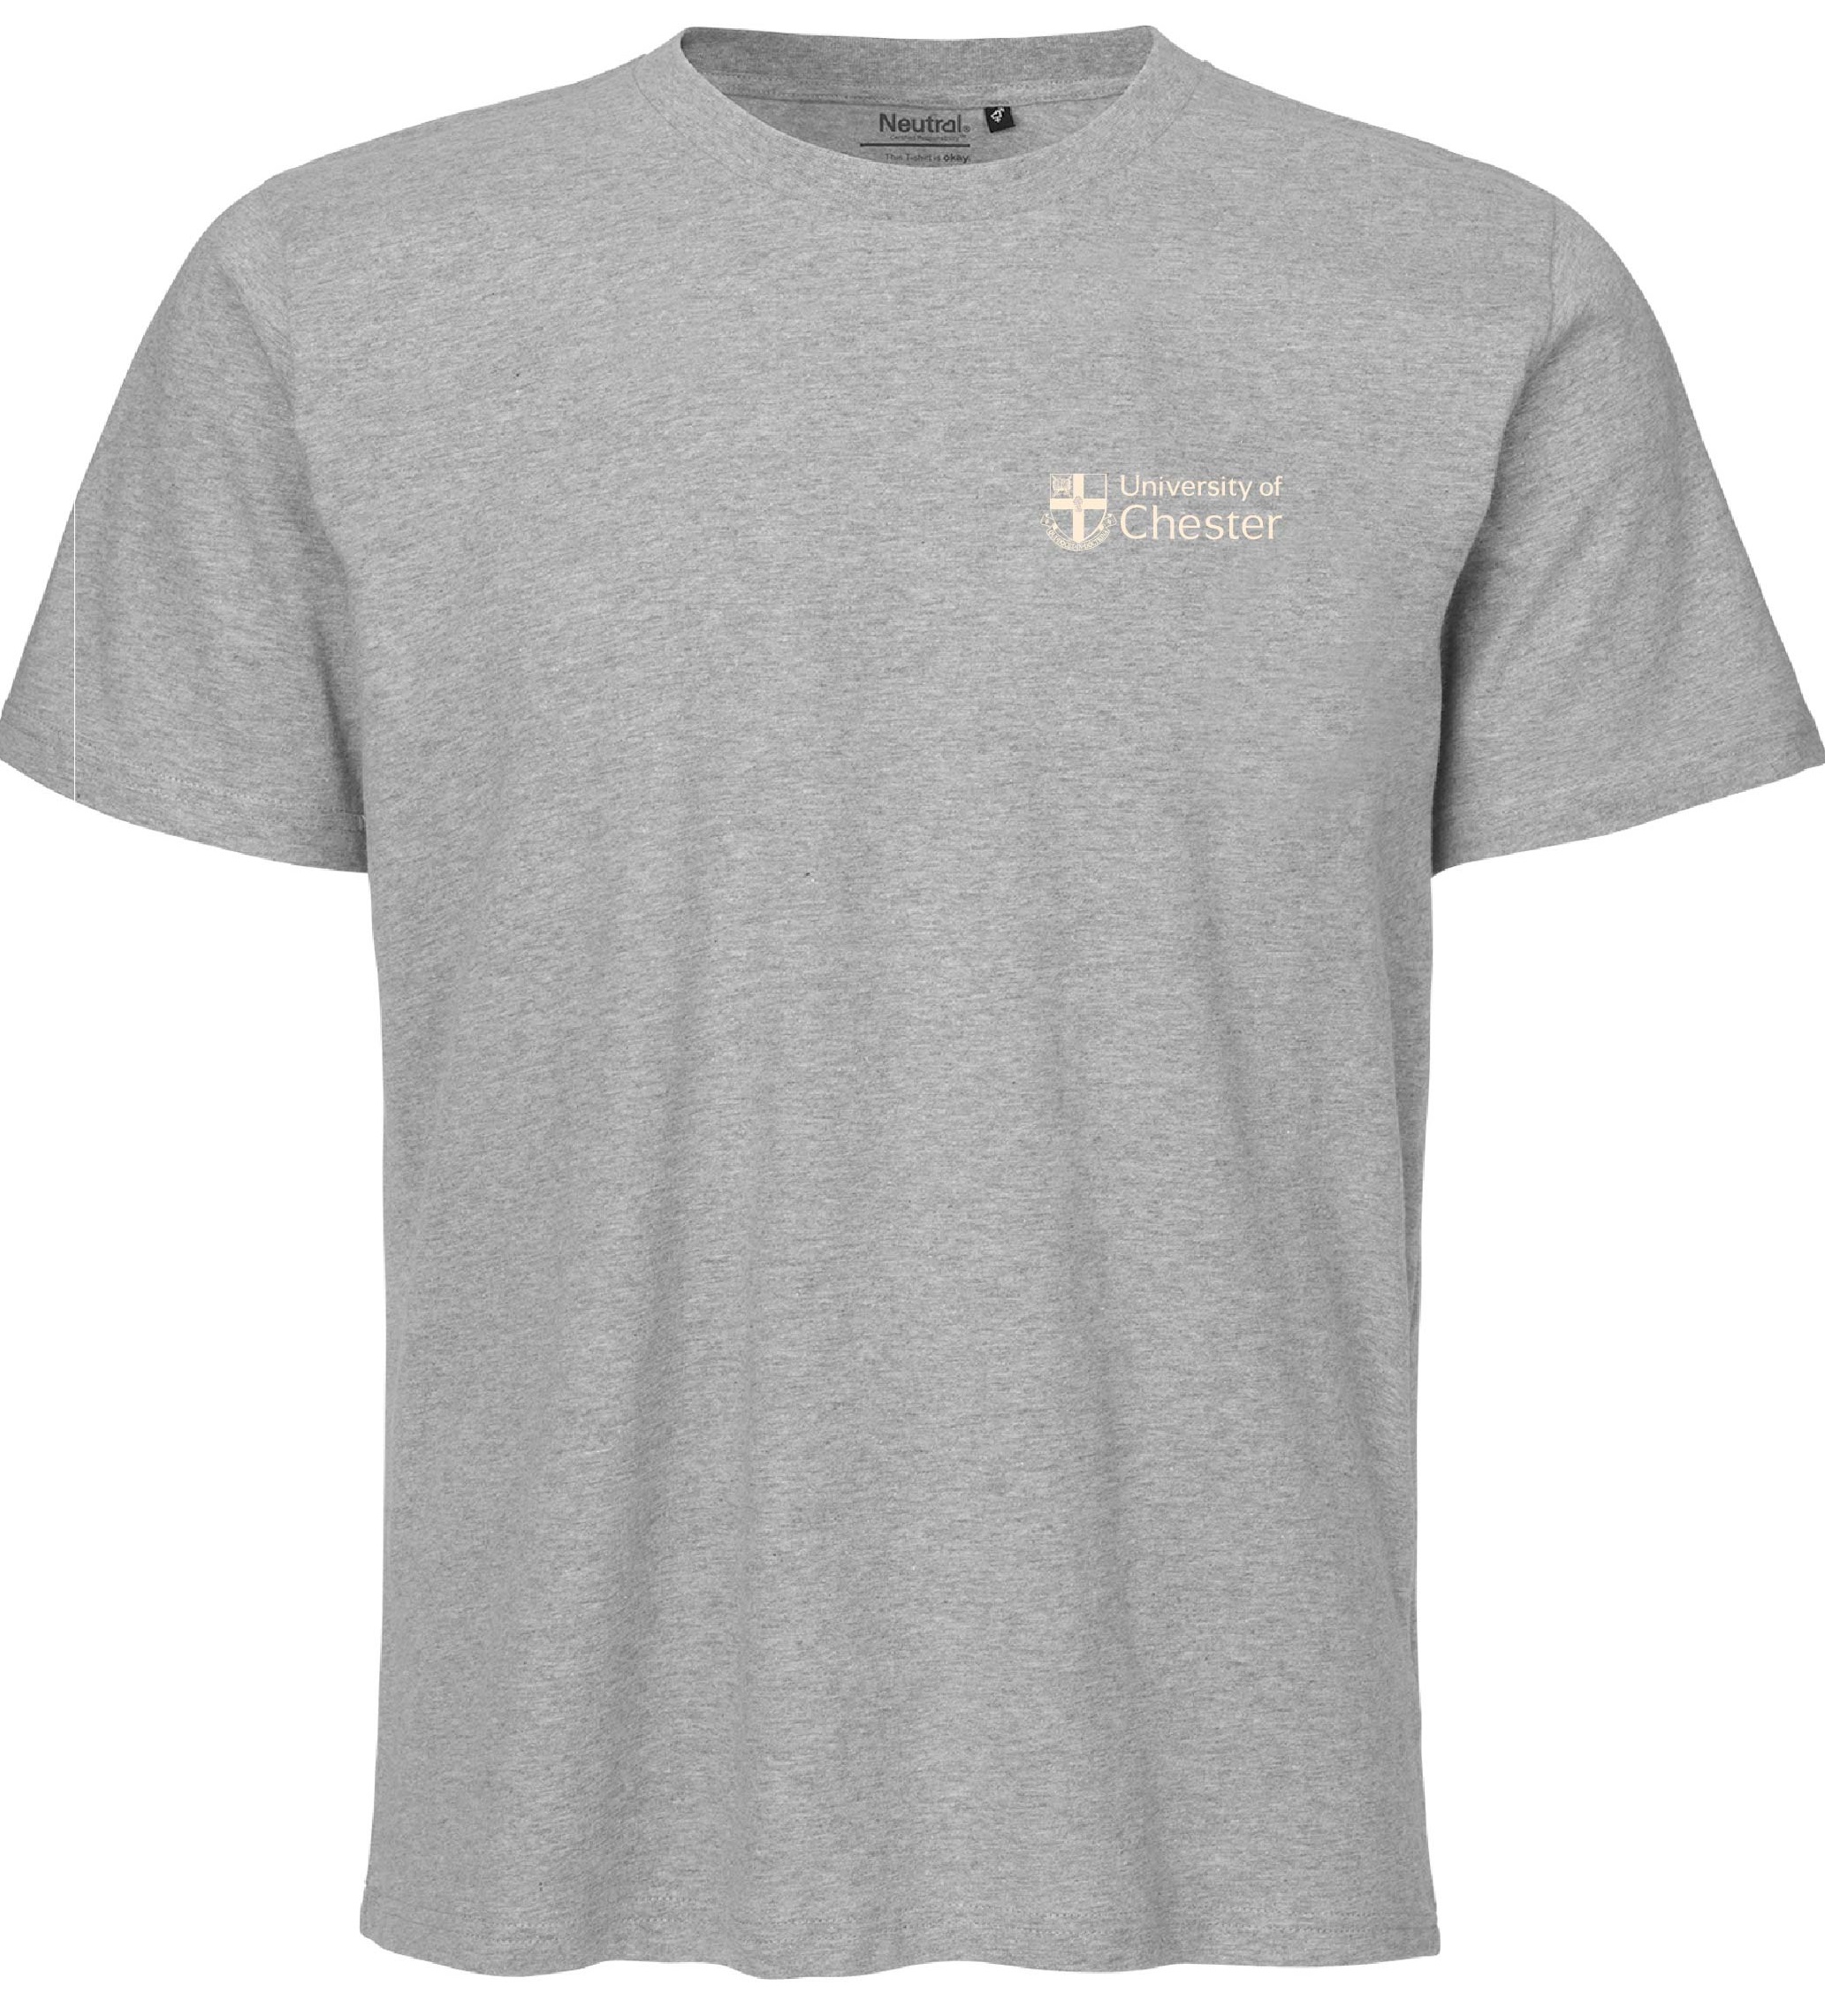 Neutral range - UoC T-Shirt - Grey - L